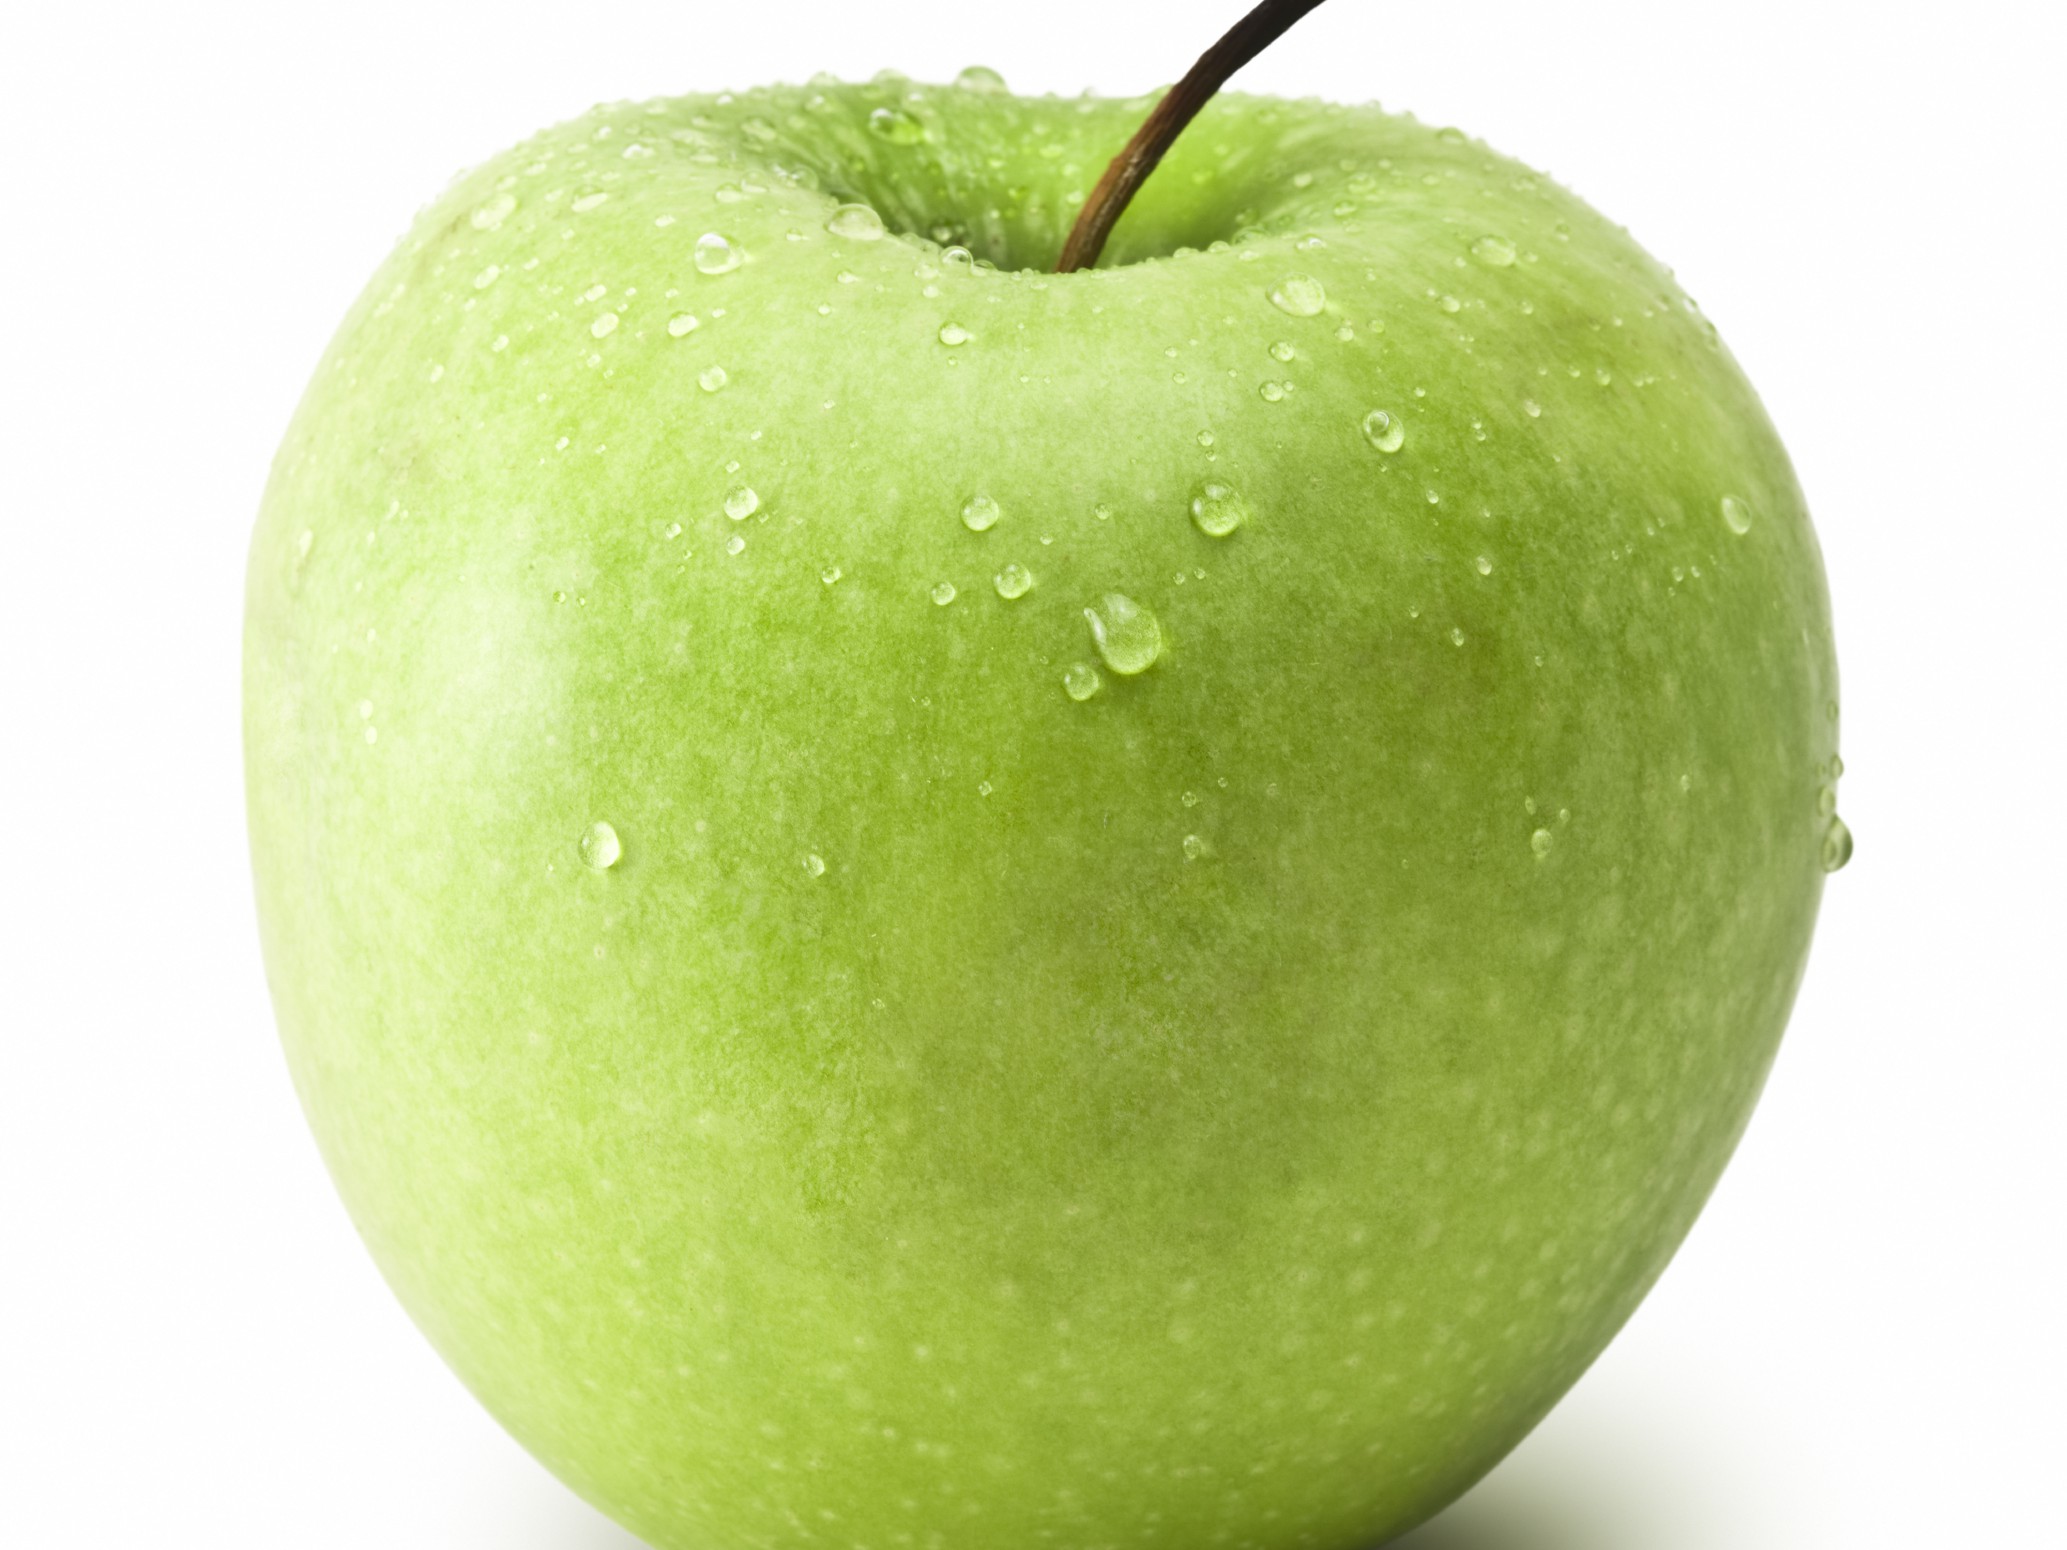 Fact: an apple keeps the doctor away